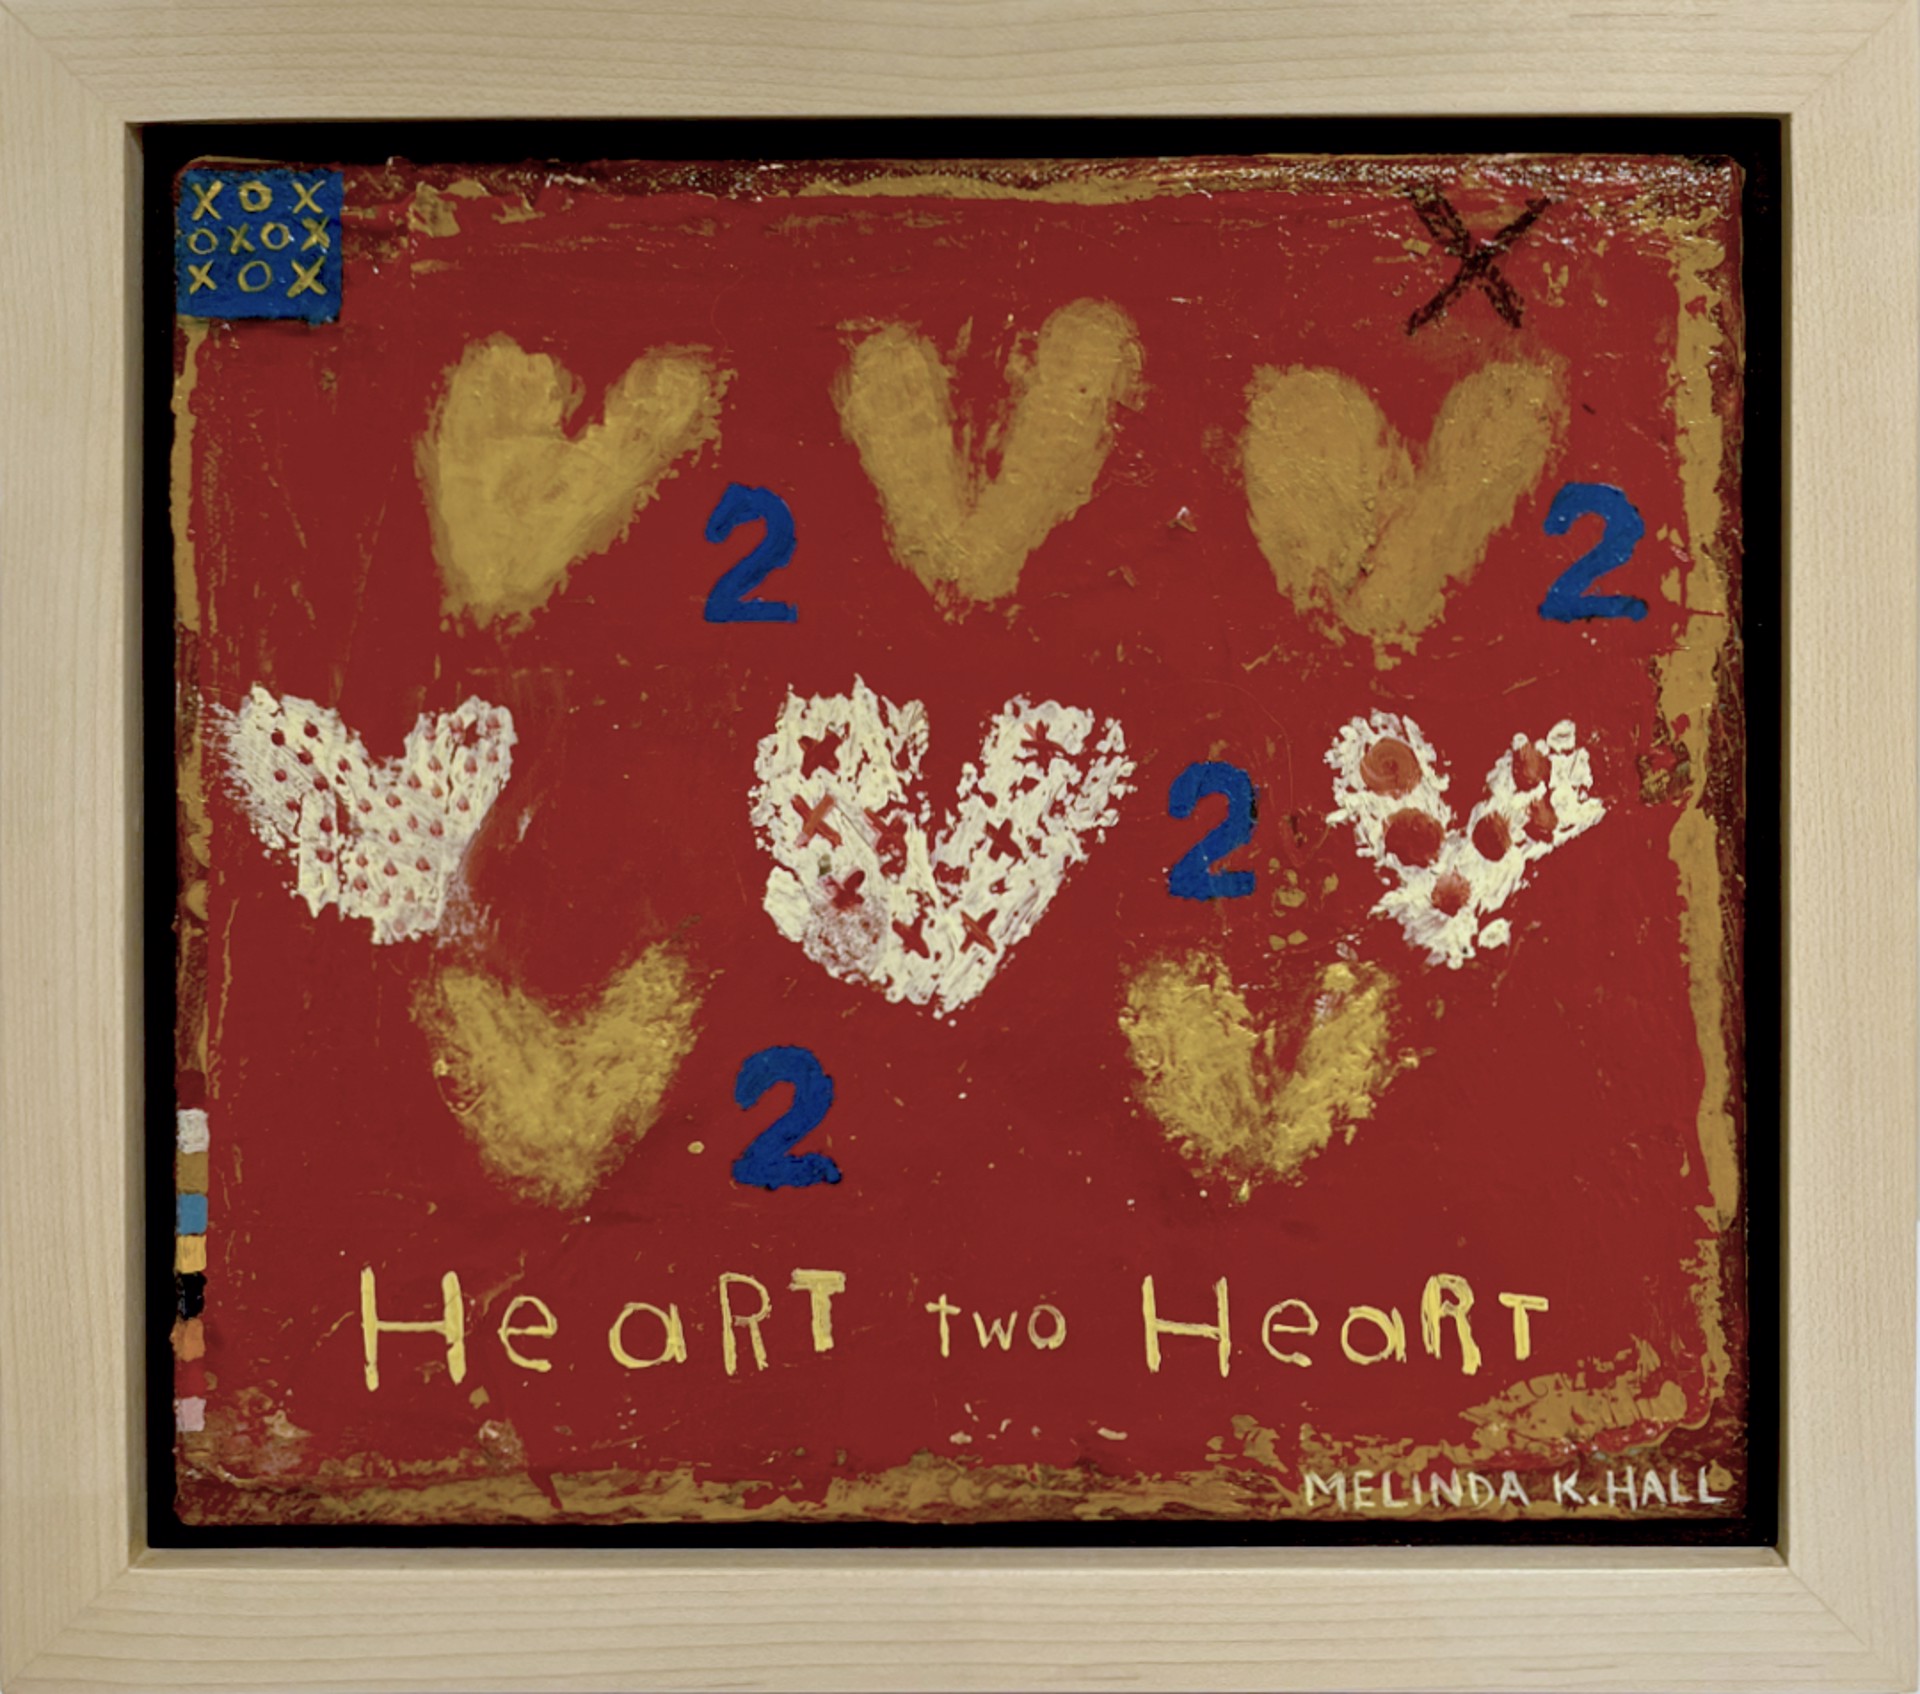 Heart Two Heart by Melinda K. Hall